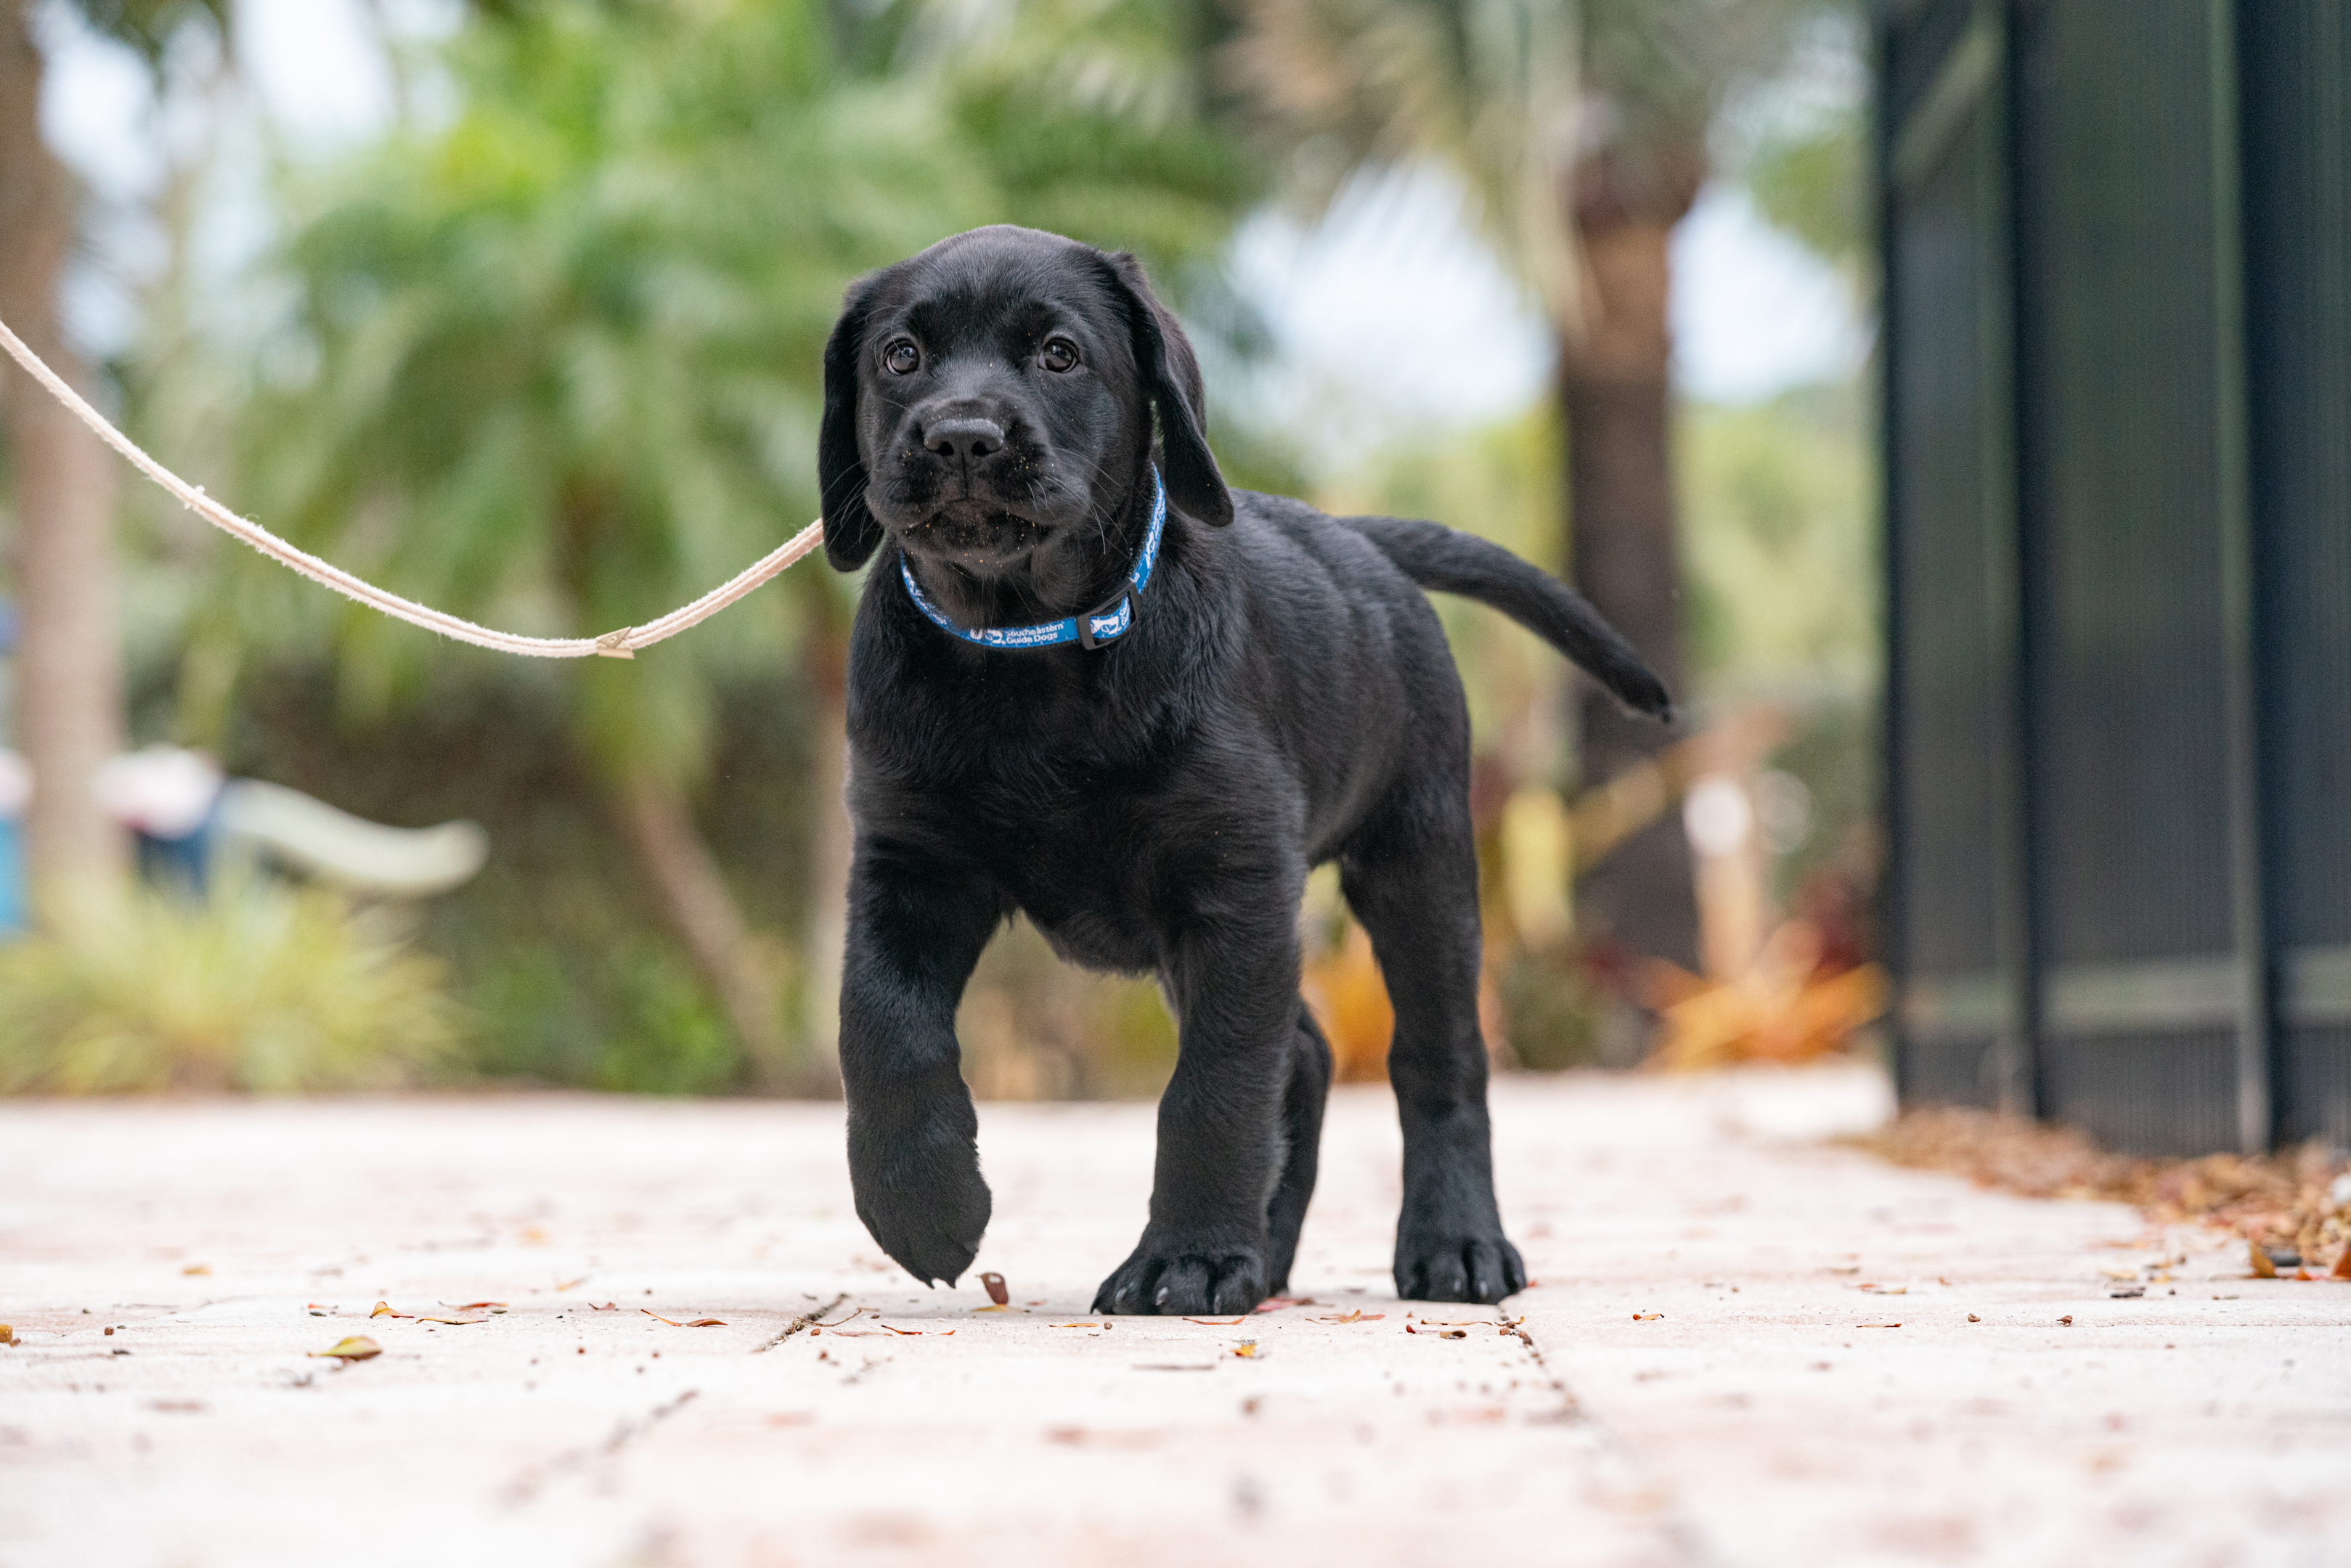 A black Labrador puppy walking outside on the sidewalk.